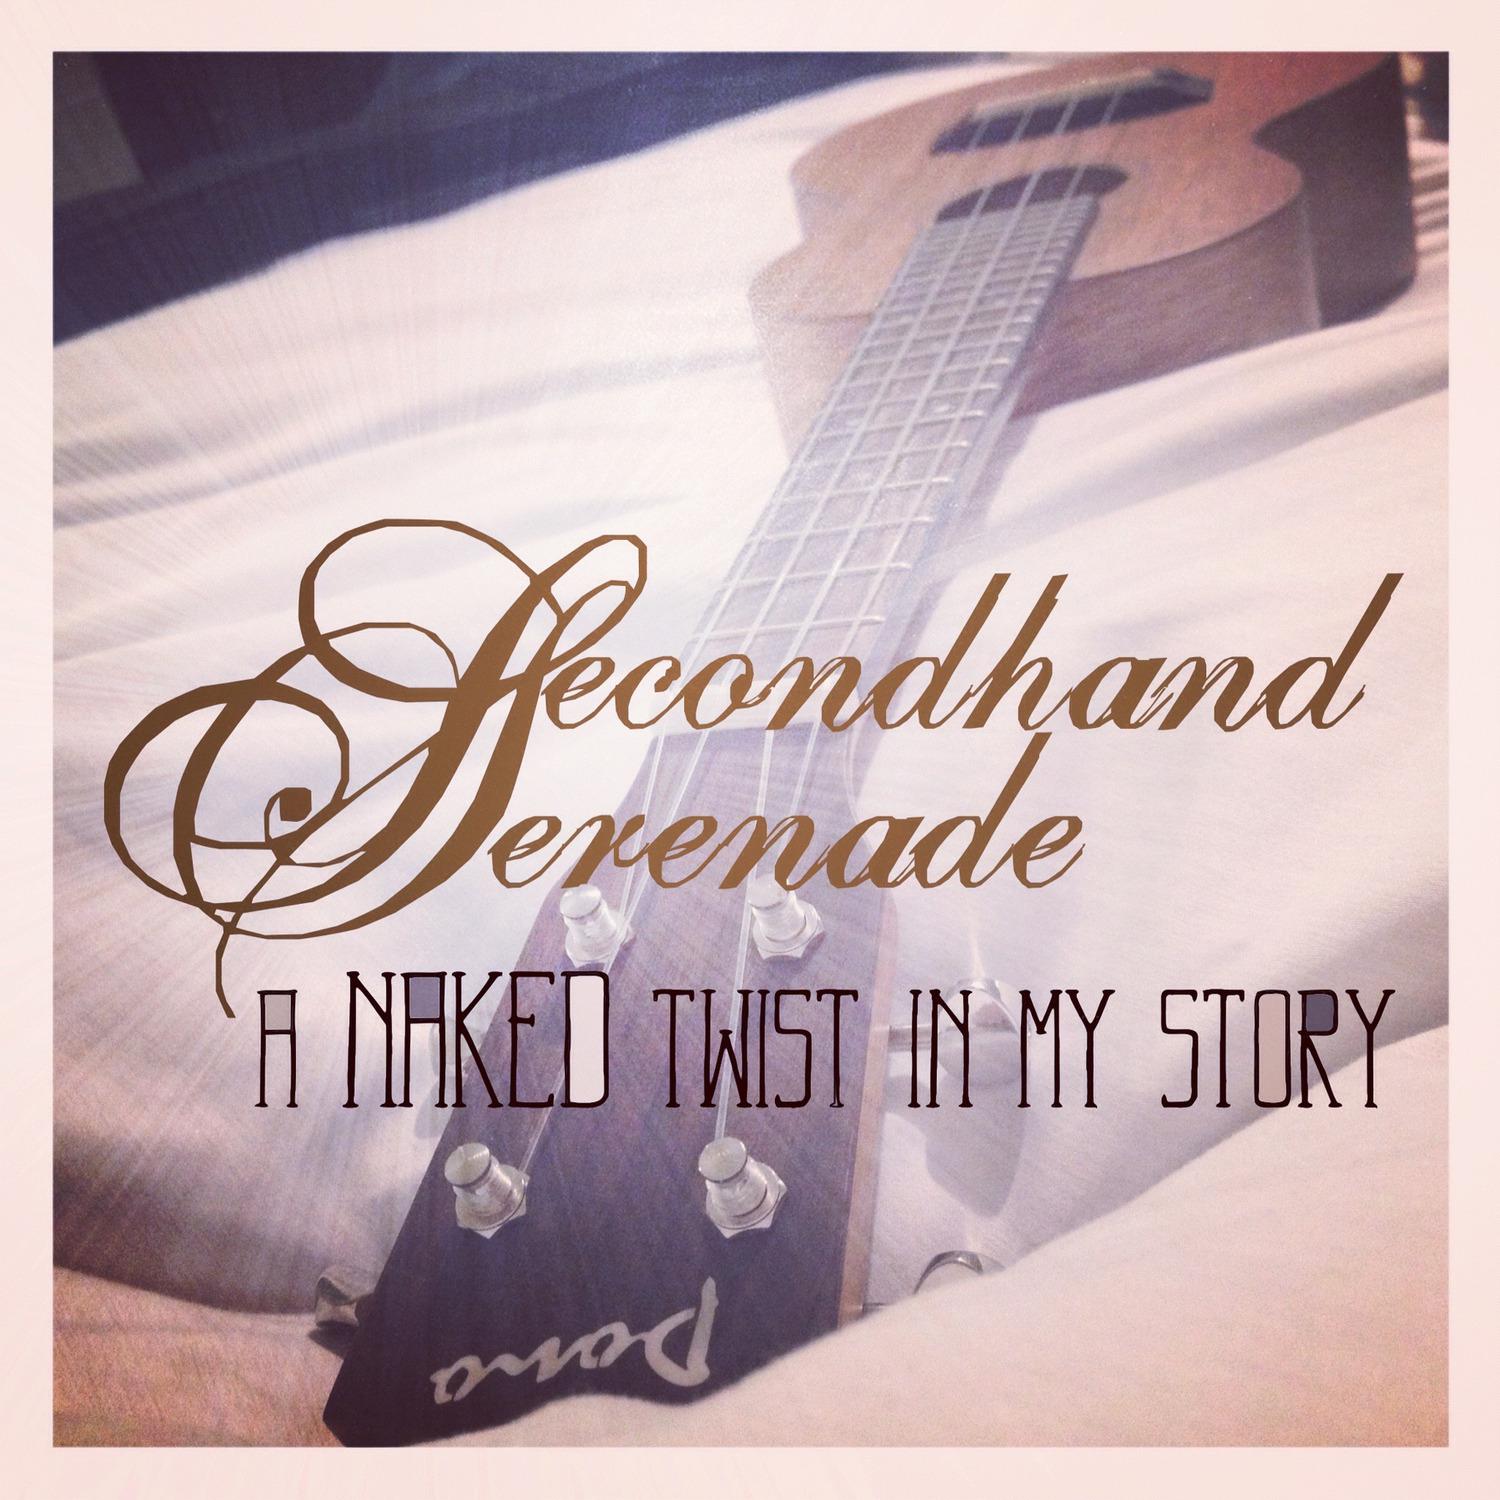 Secondhand Serenade - Belong to (Bonus Track)